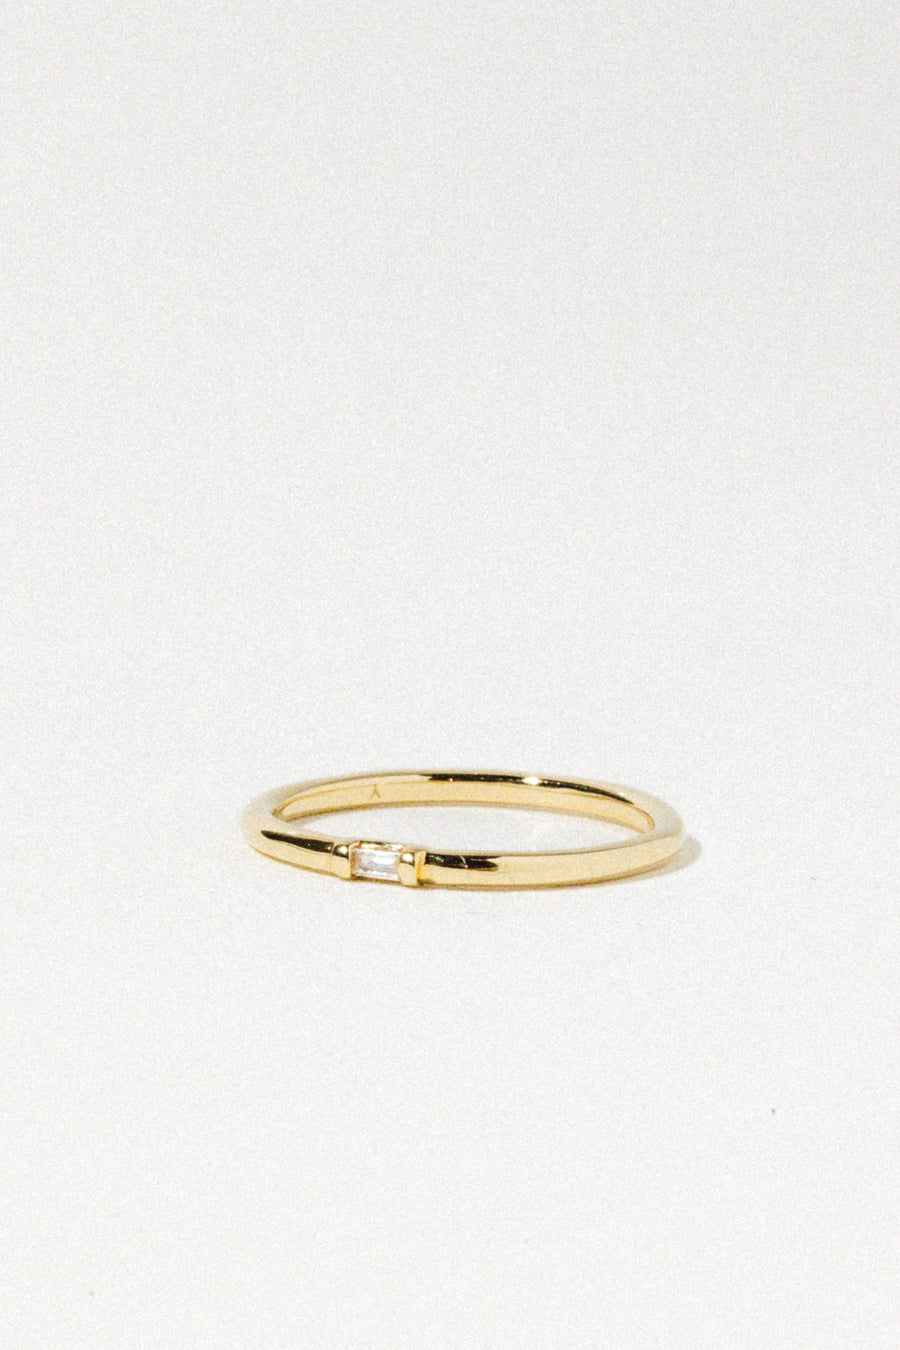 Tresor Jewelry Gold / US 5 14kt Lone Star Diamond Ring